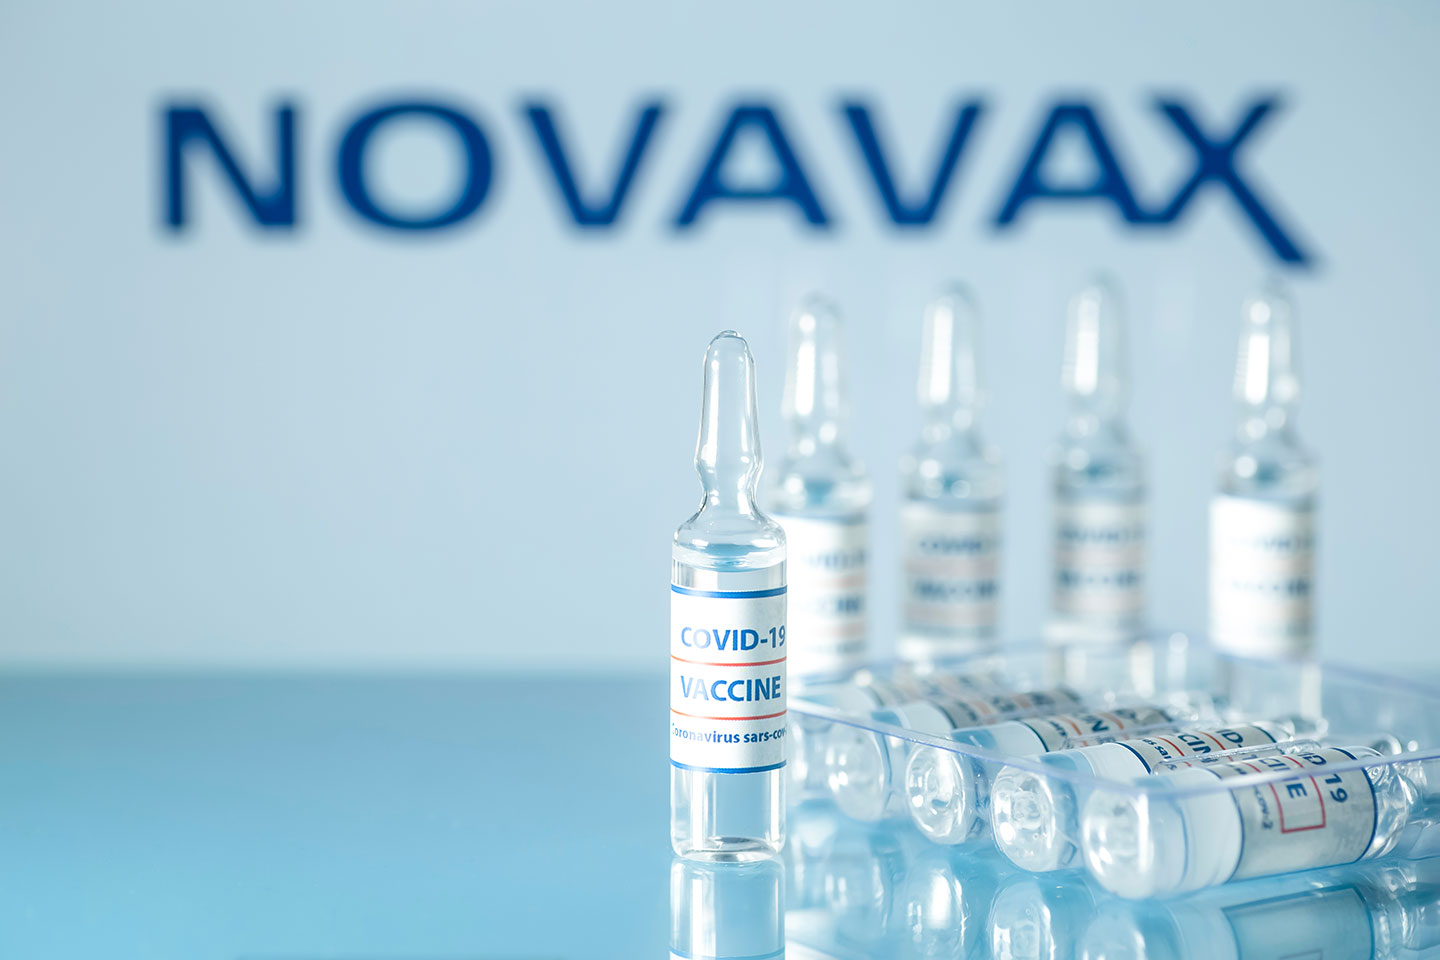 Gavi Signs Memorandum Of Understanding With Novavax On Behalf Of Covax Facility Gavi The Vaccine Alliance